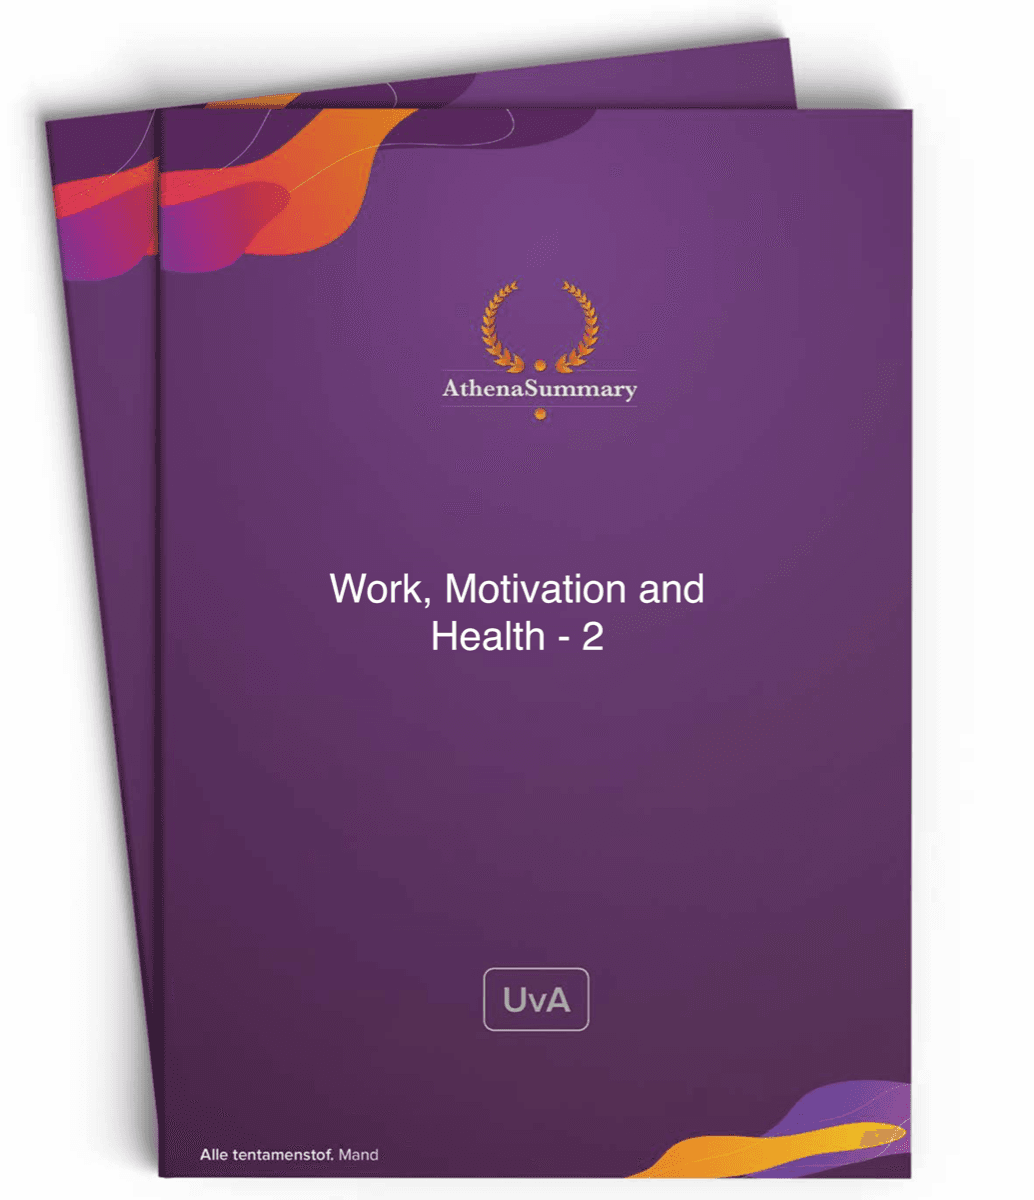 Literature Summary: Work, Motivation and Health - 2